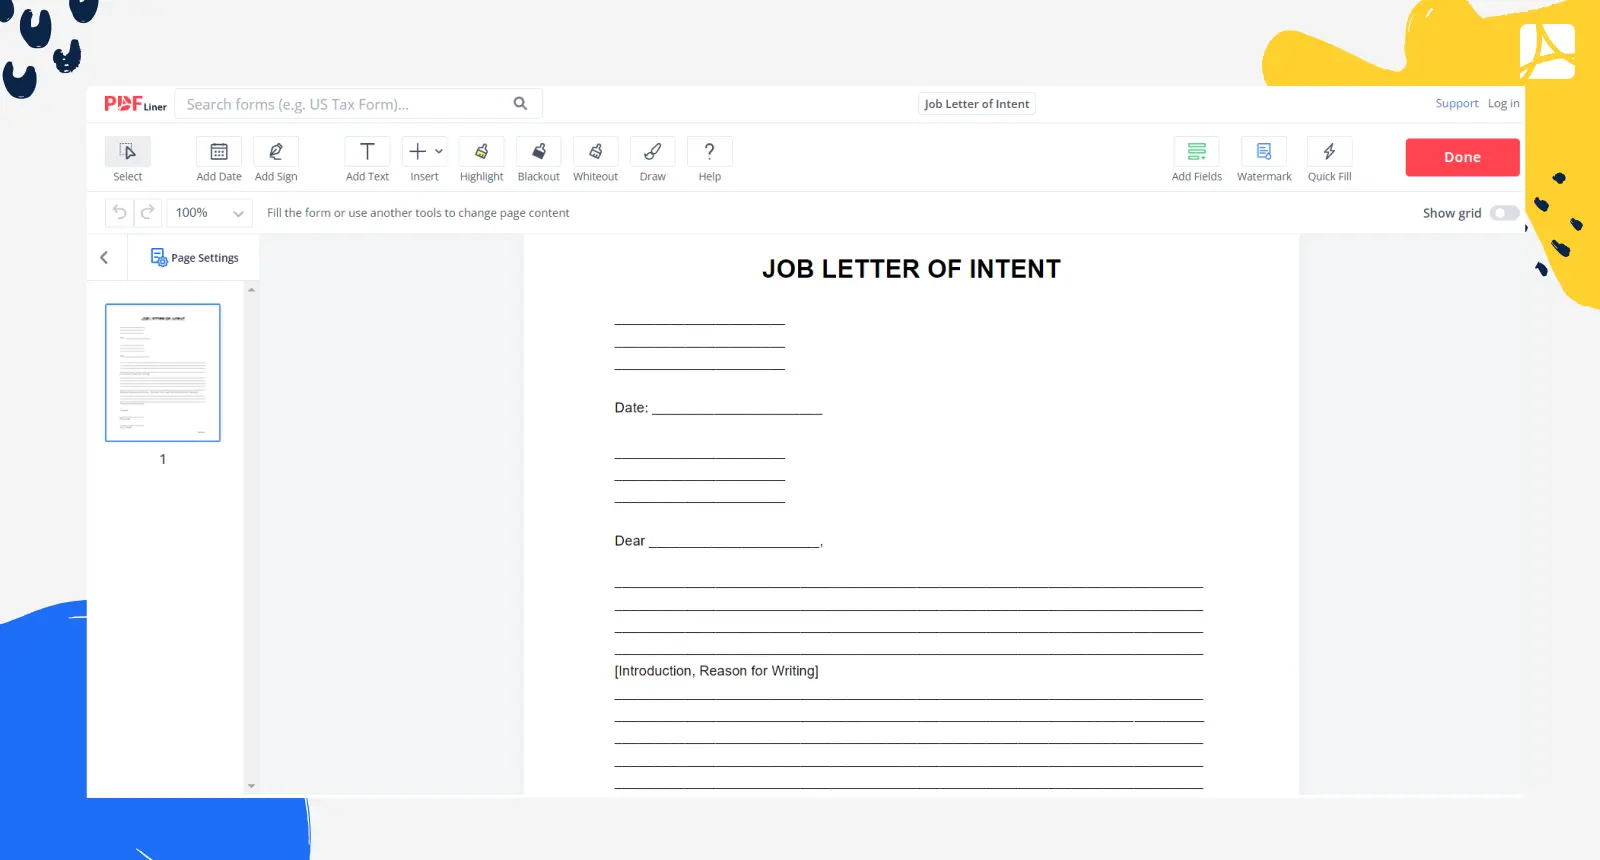 Job Letter of Intent Form Screenshot